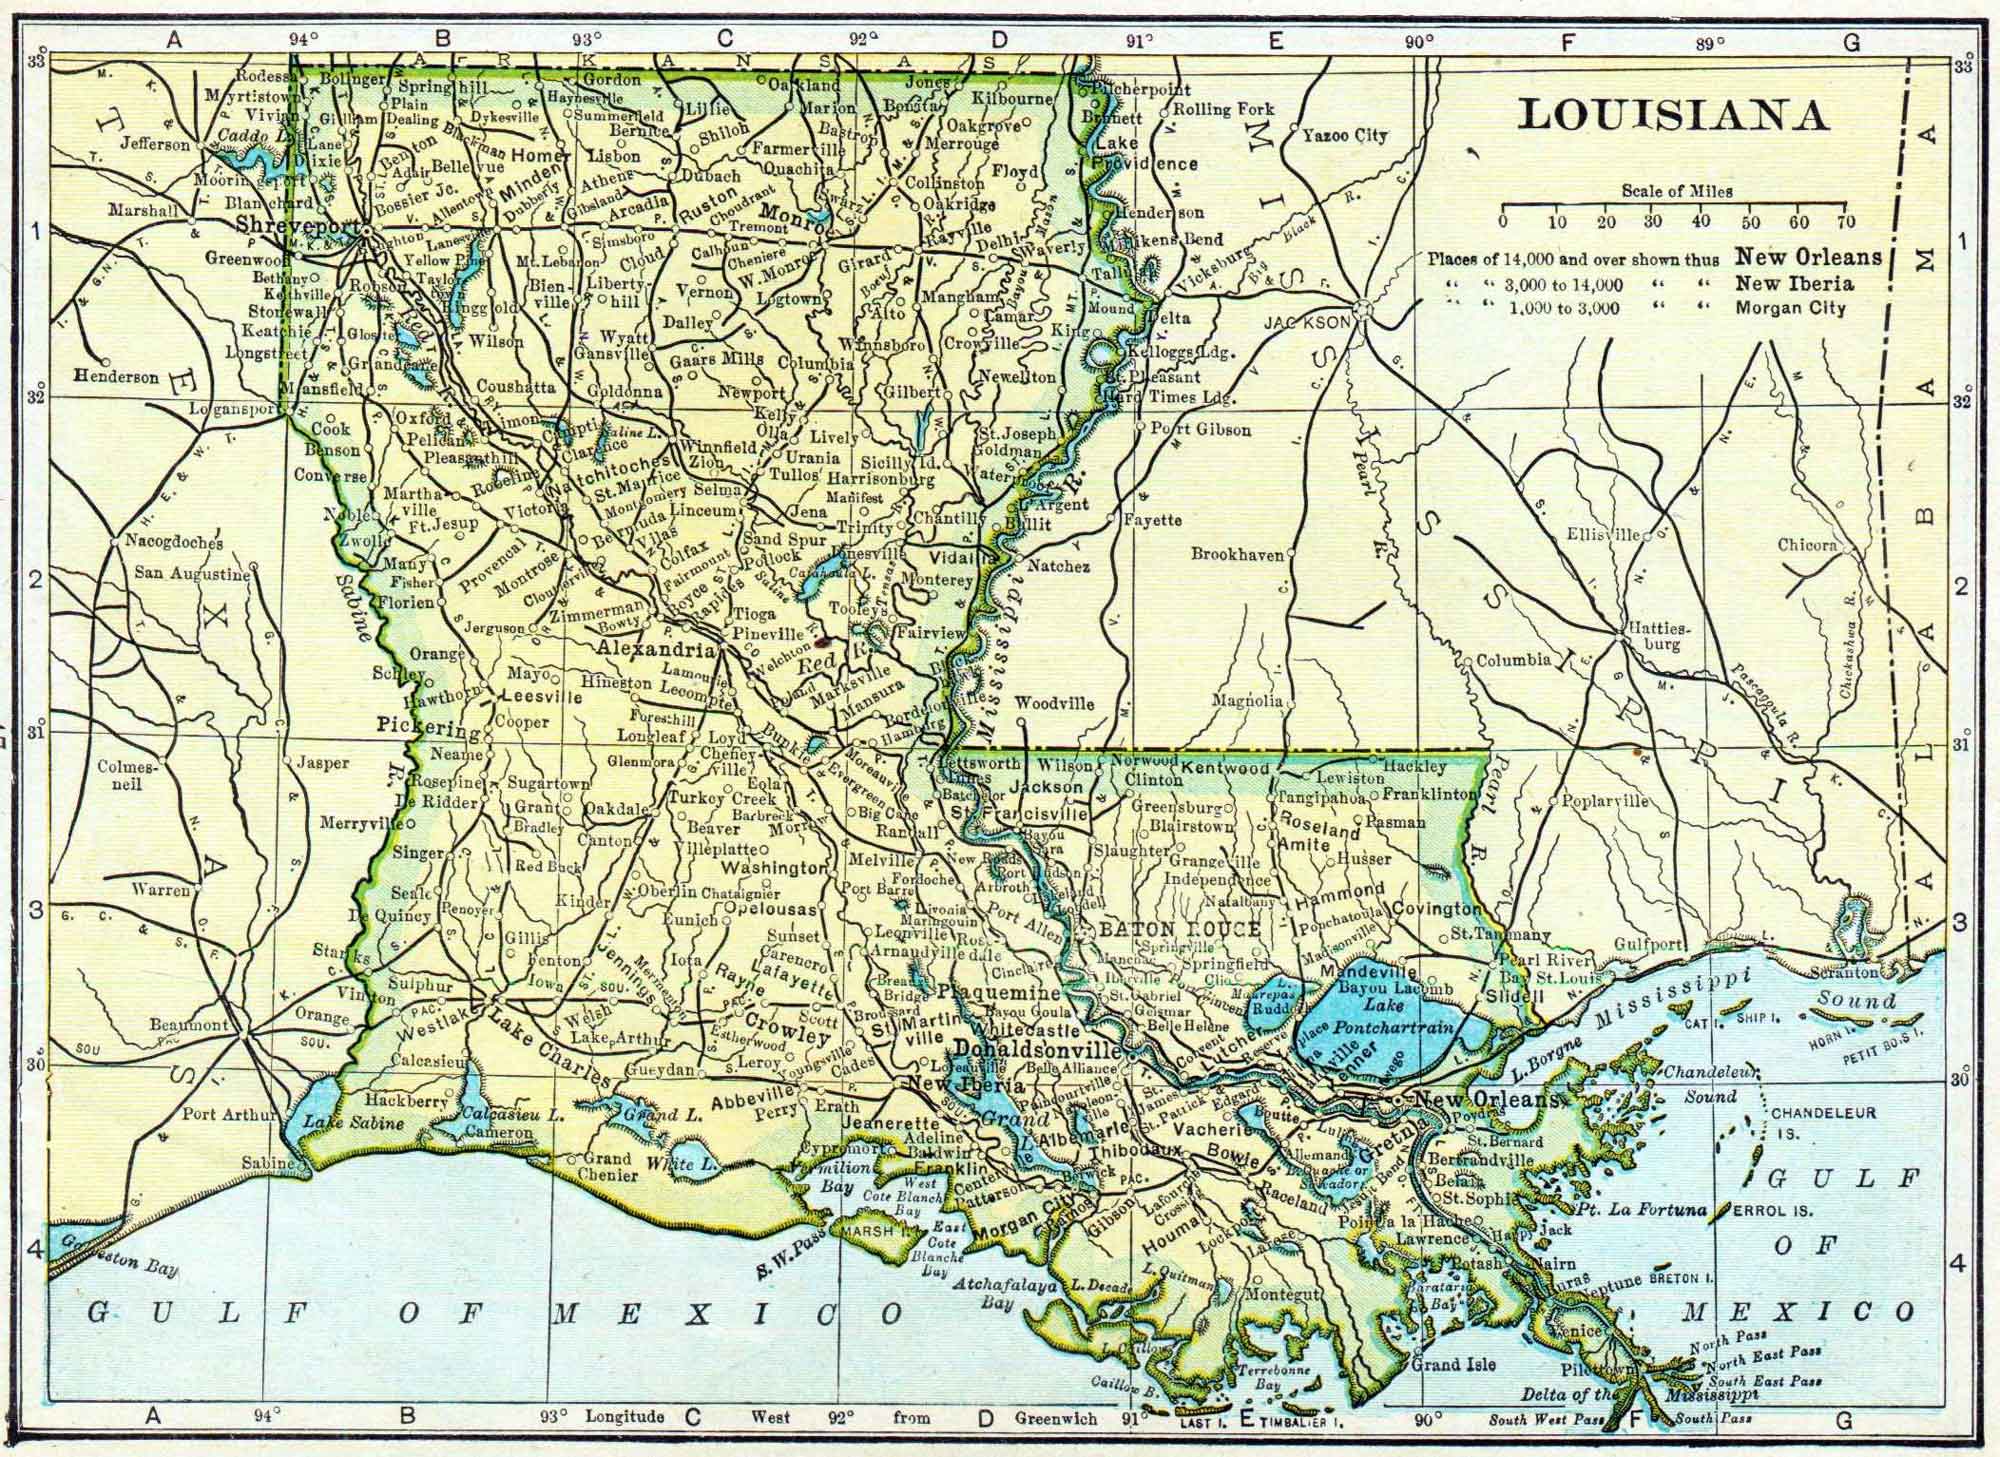 1910 Louisiana Census Map | Access Genealogy